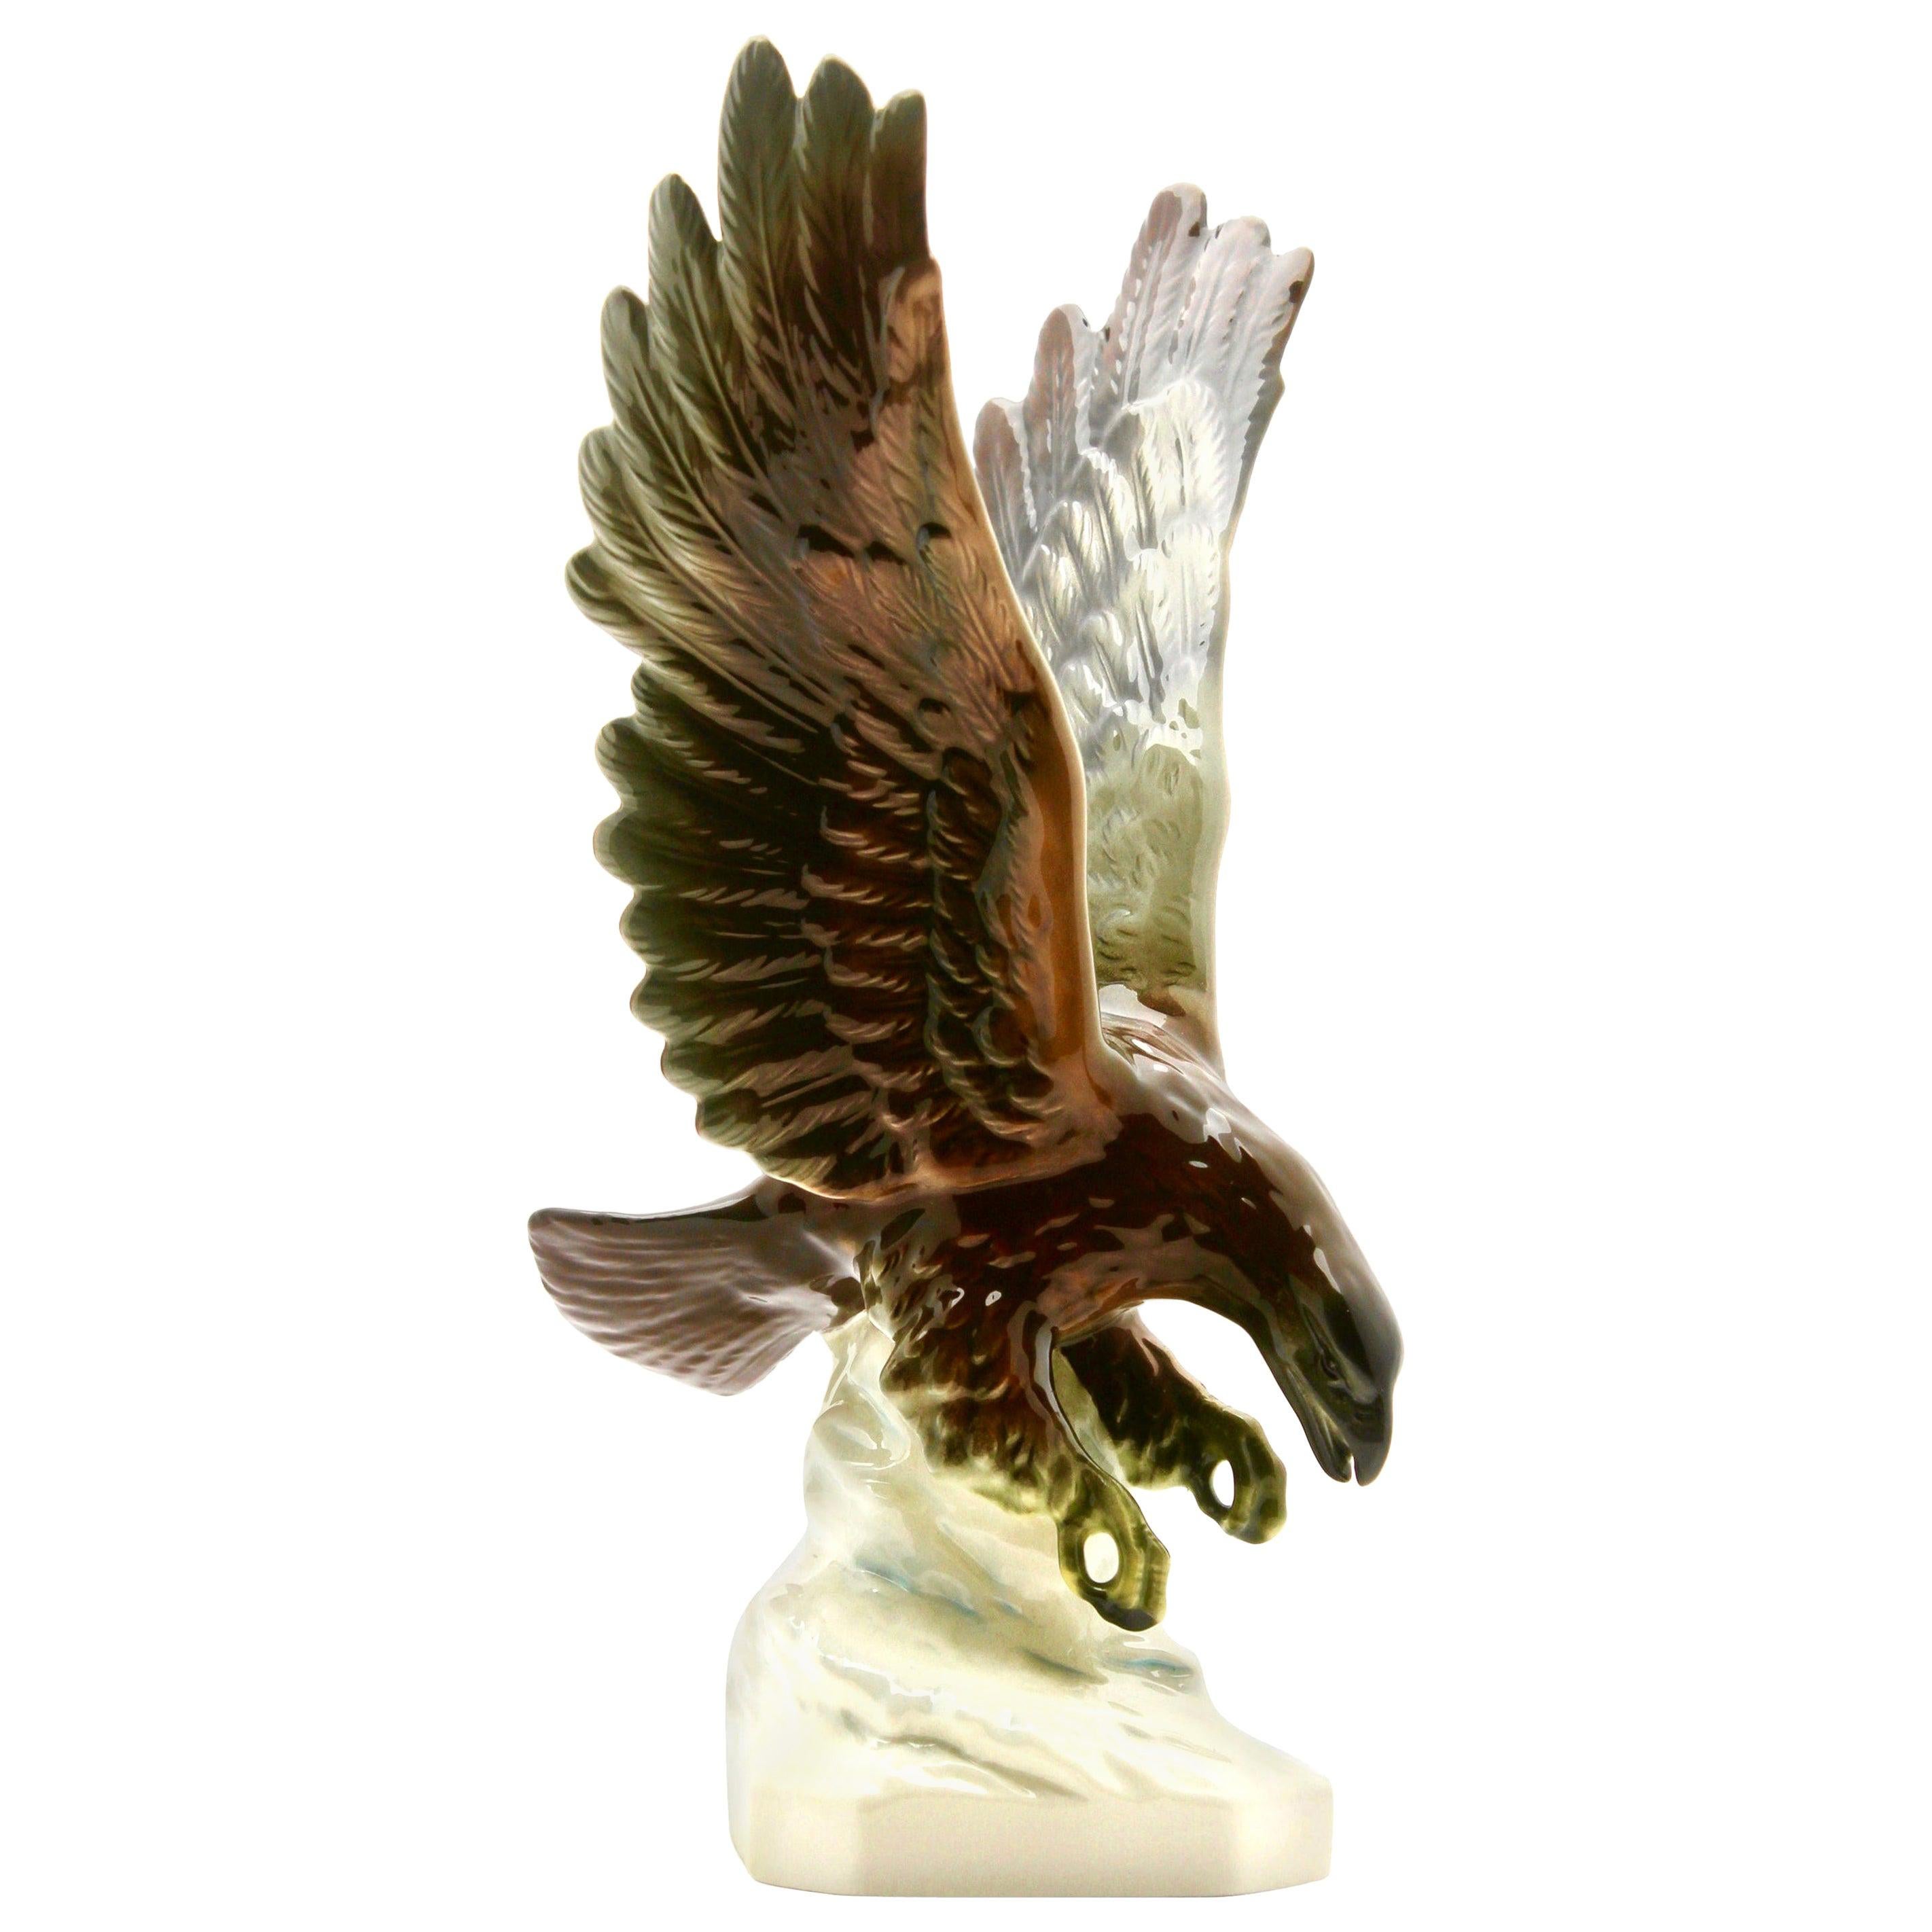 Porcelain Figurine of a Bird of Prey by Goebel Germany, Signed 'Goebel' For Sale